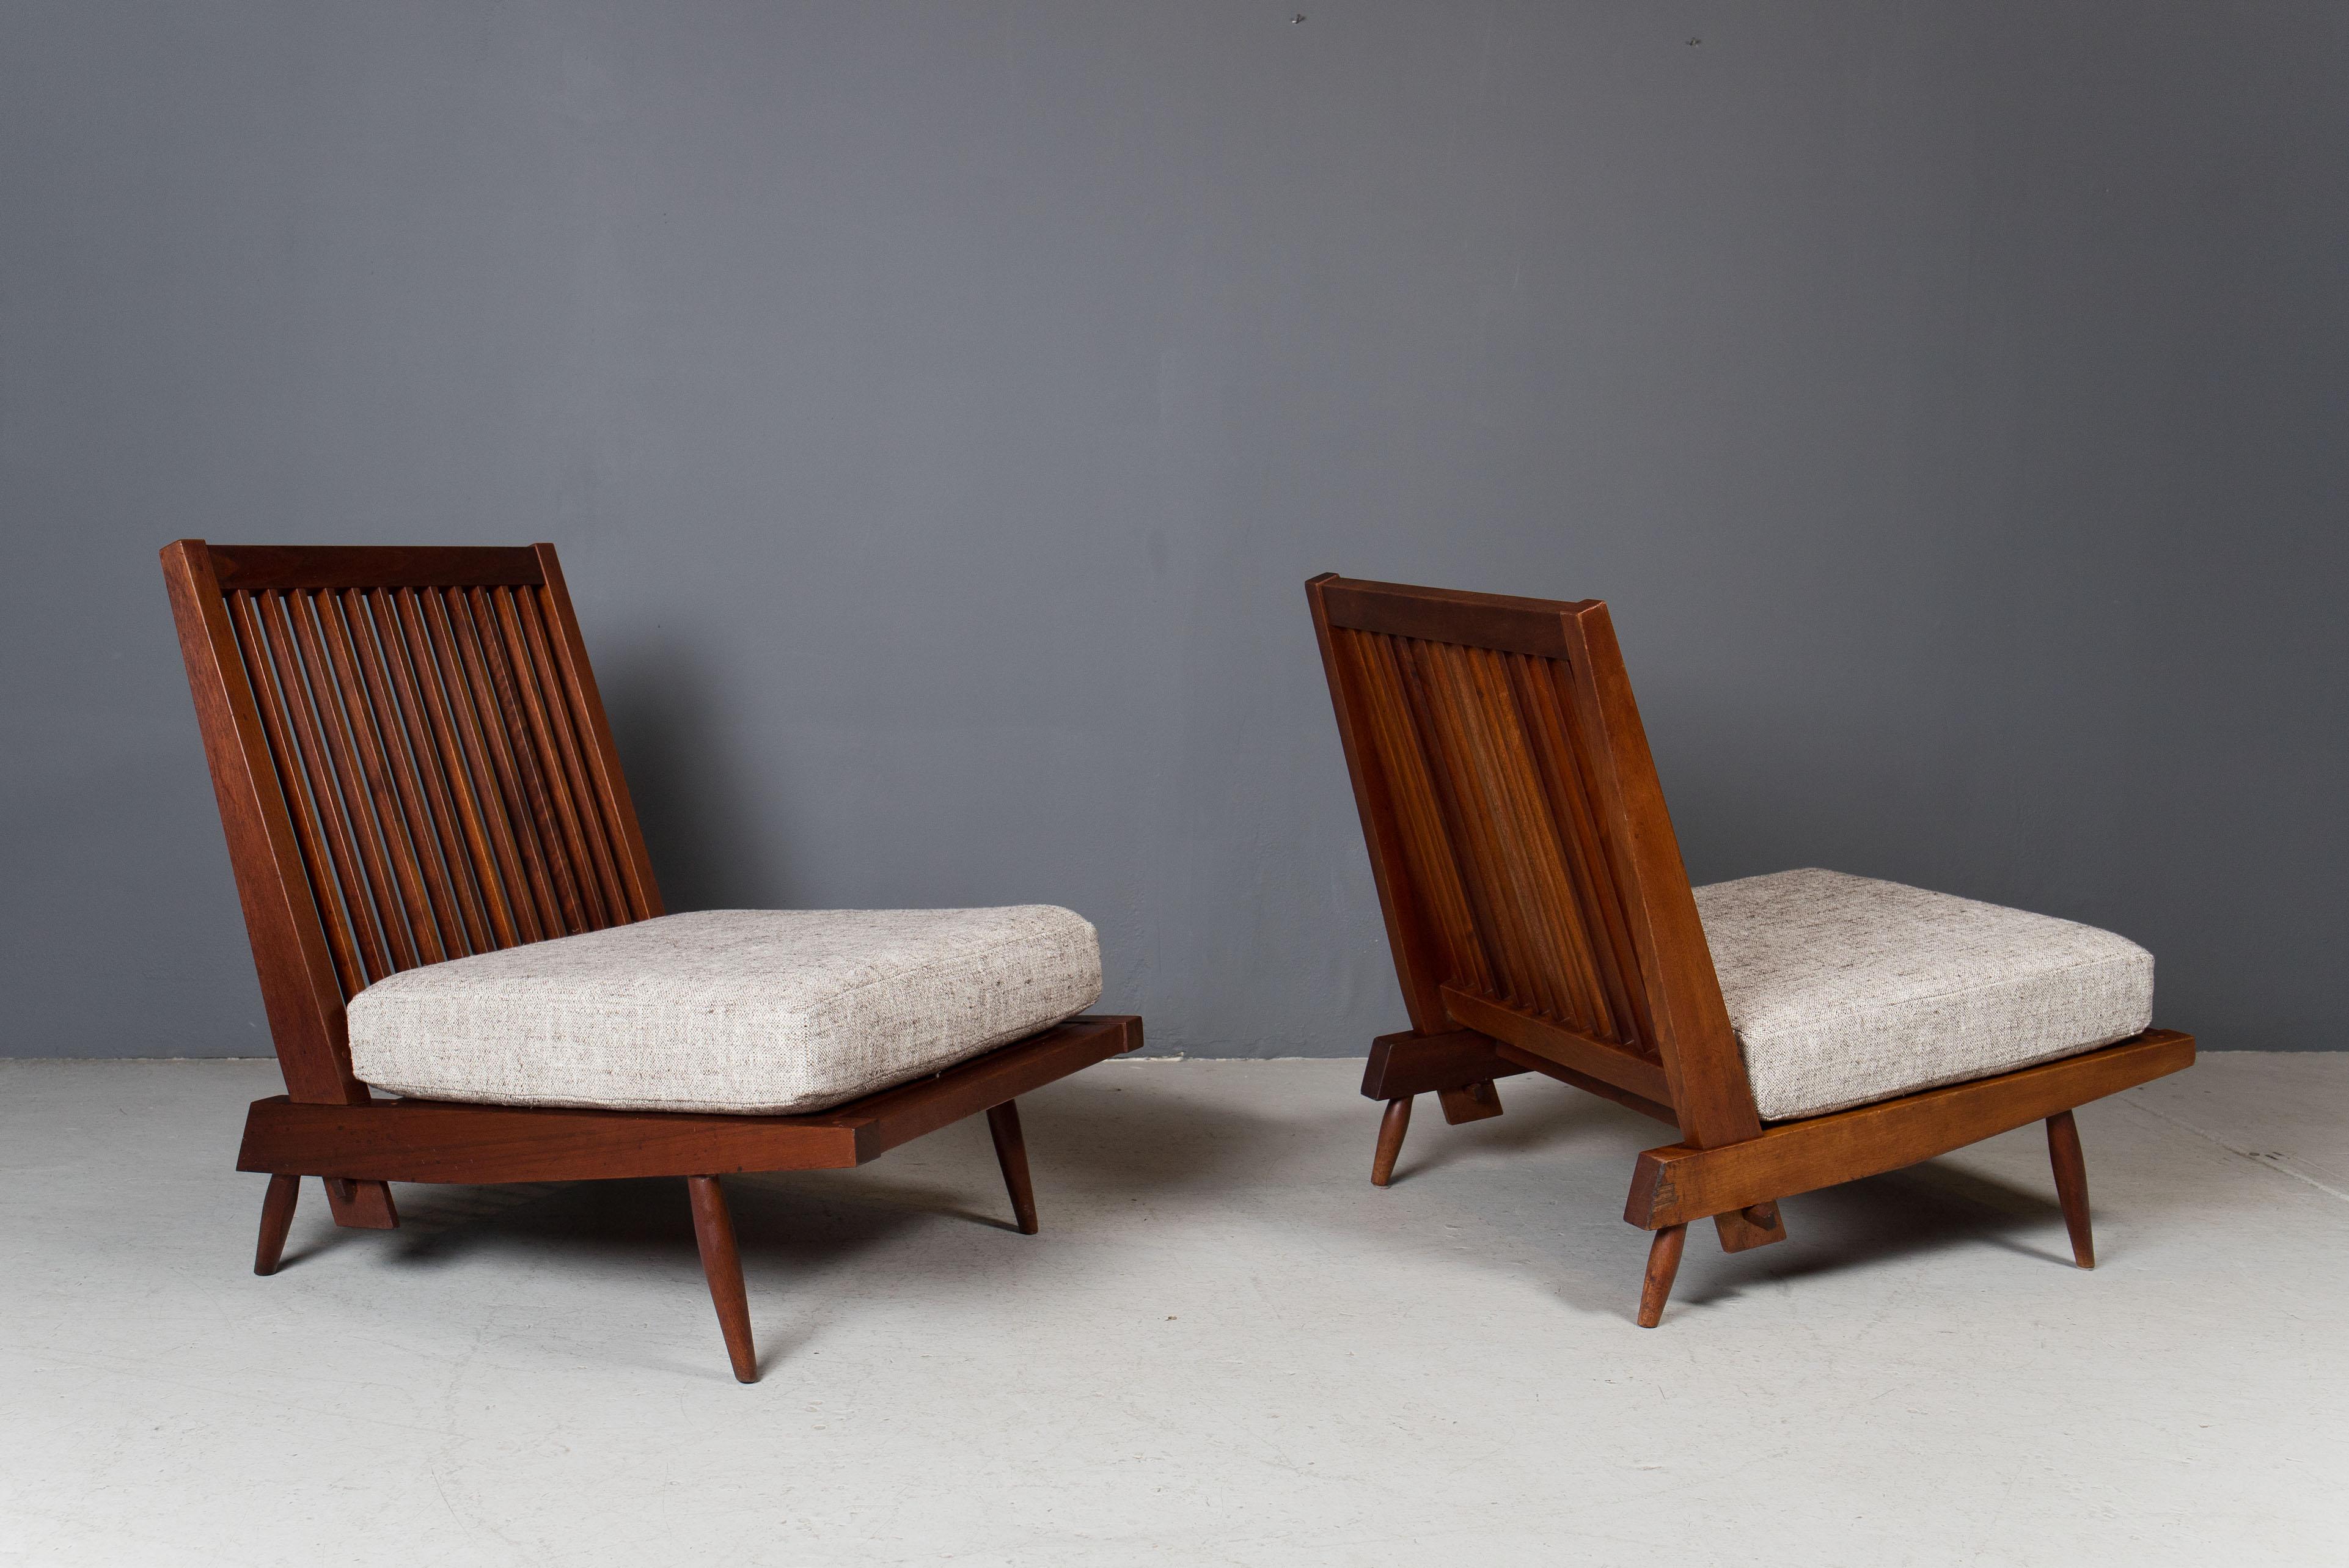 American Craftsman George Nakashima, Armless Cushion Chairs, Ca 1960s